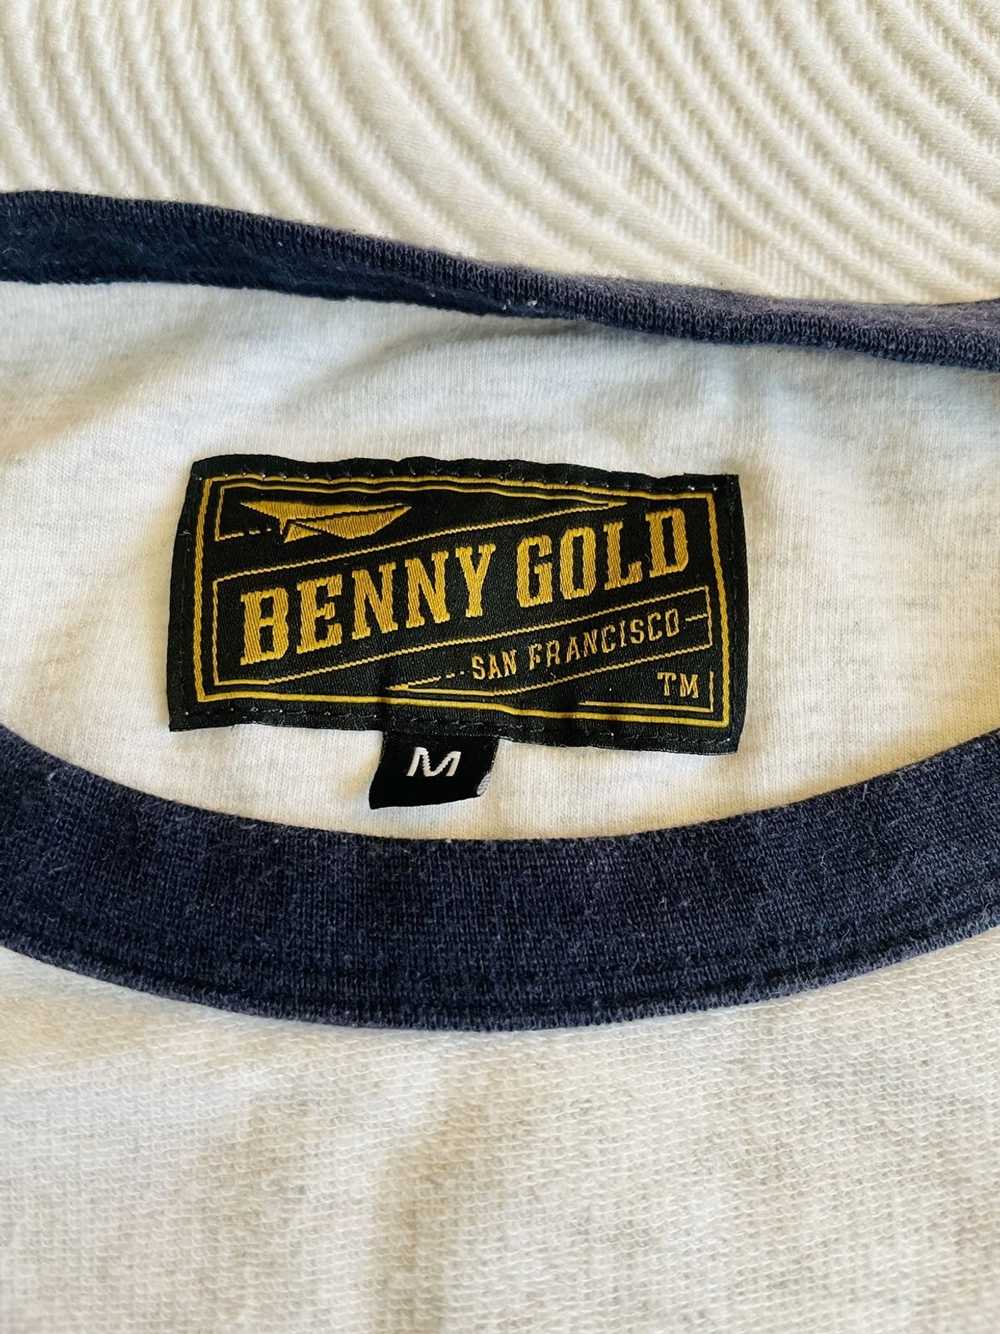 Benny Gold Benny Gold pocket tshirt - image 3